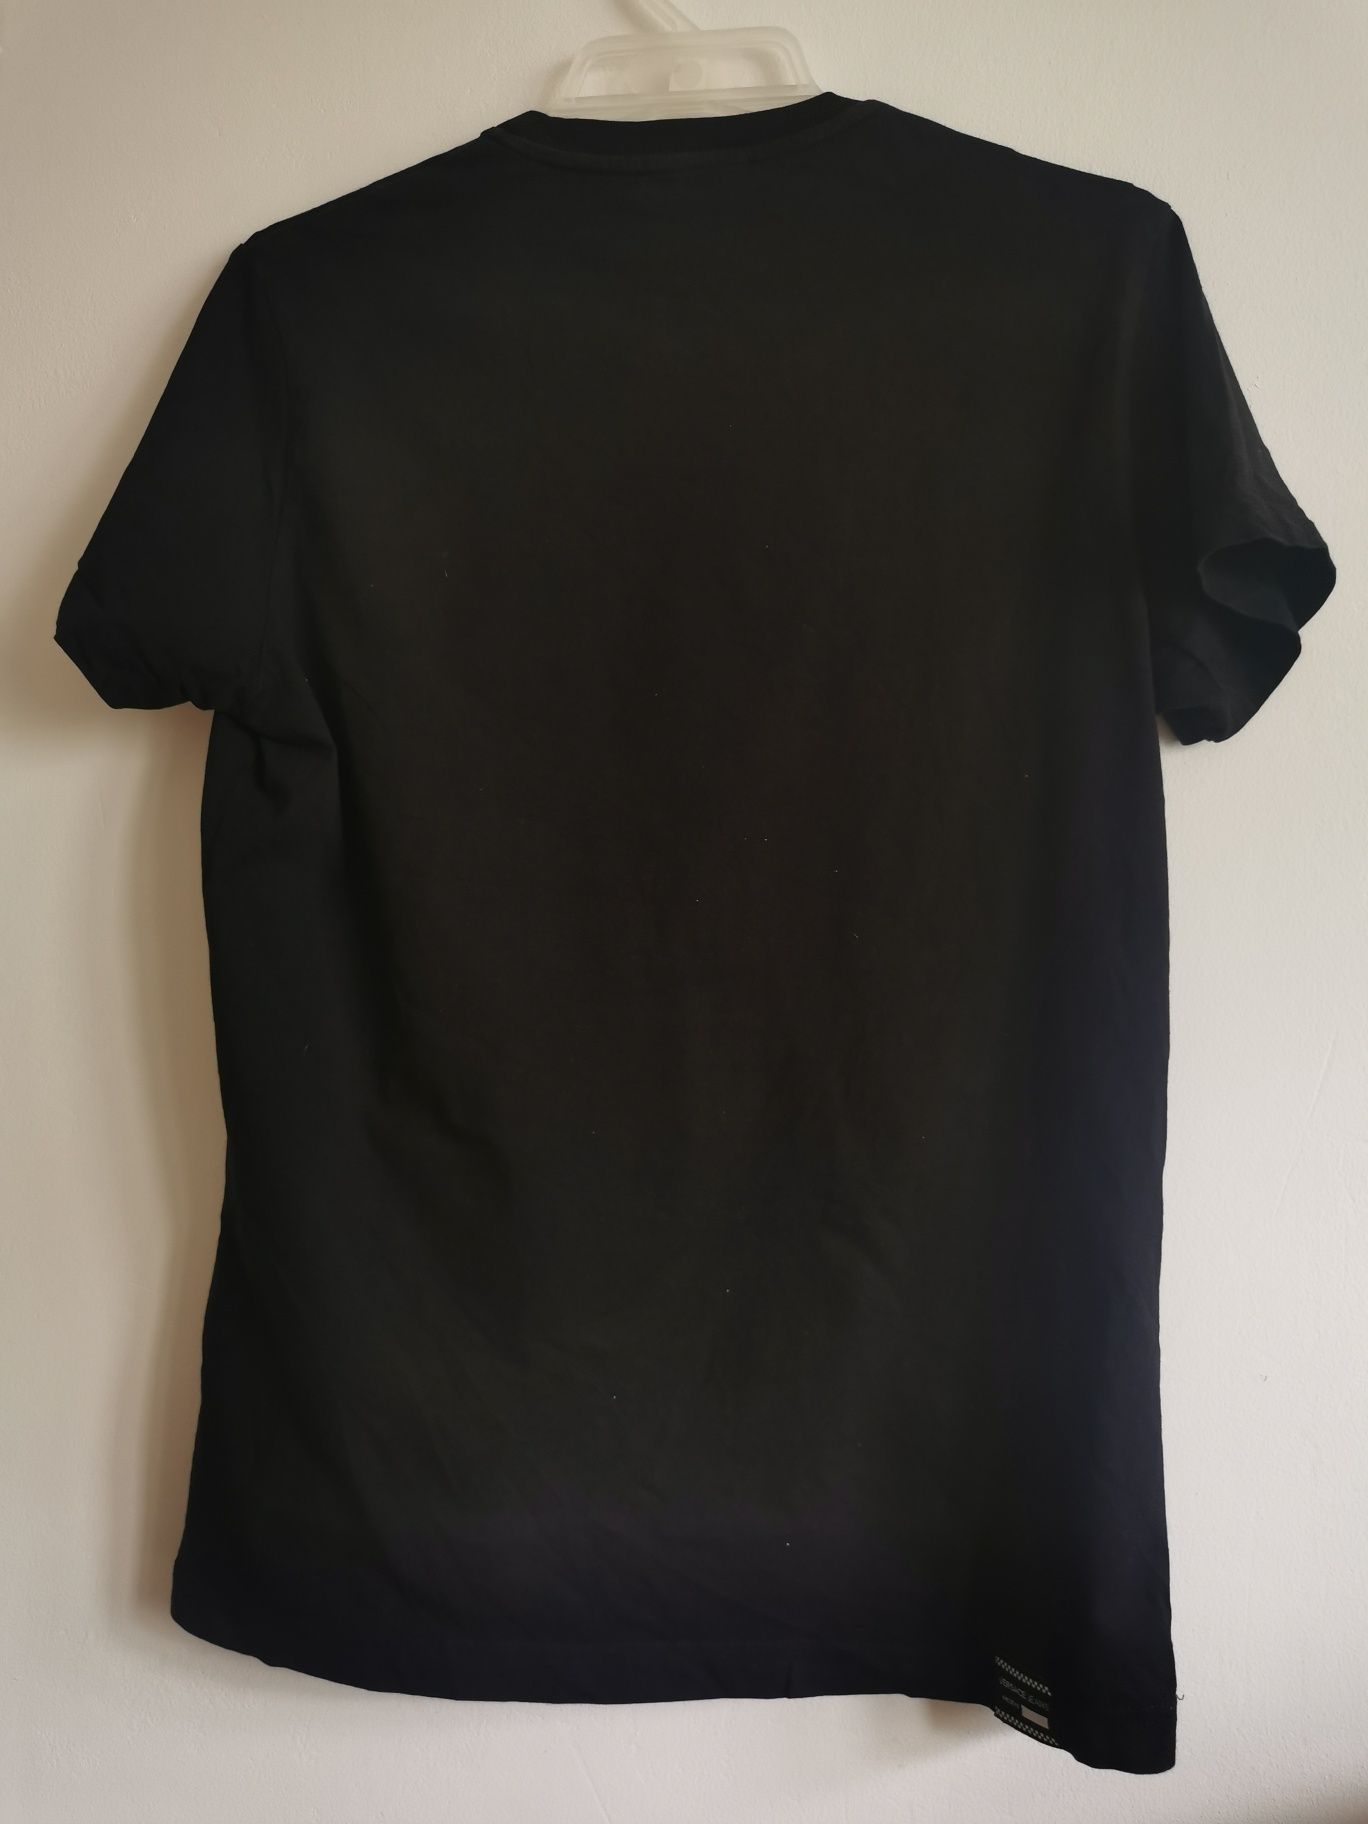 T-shirt versace jeans, czarna koszulka versace